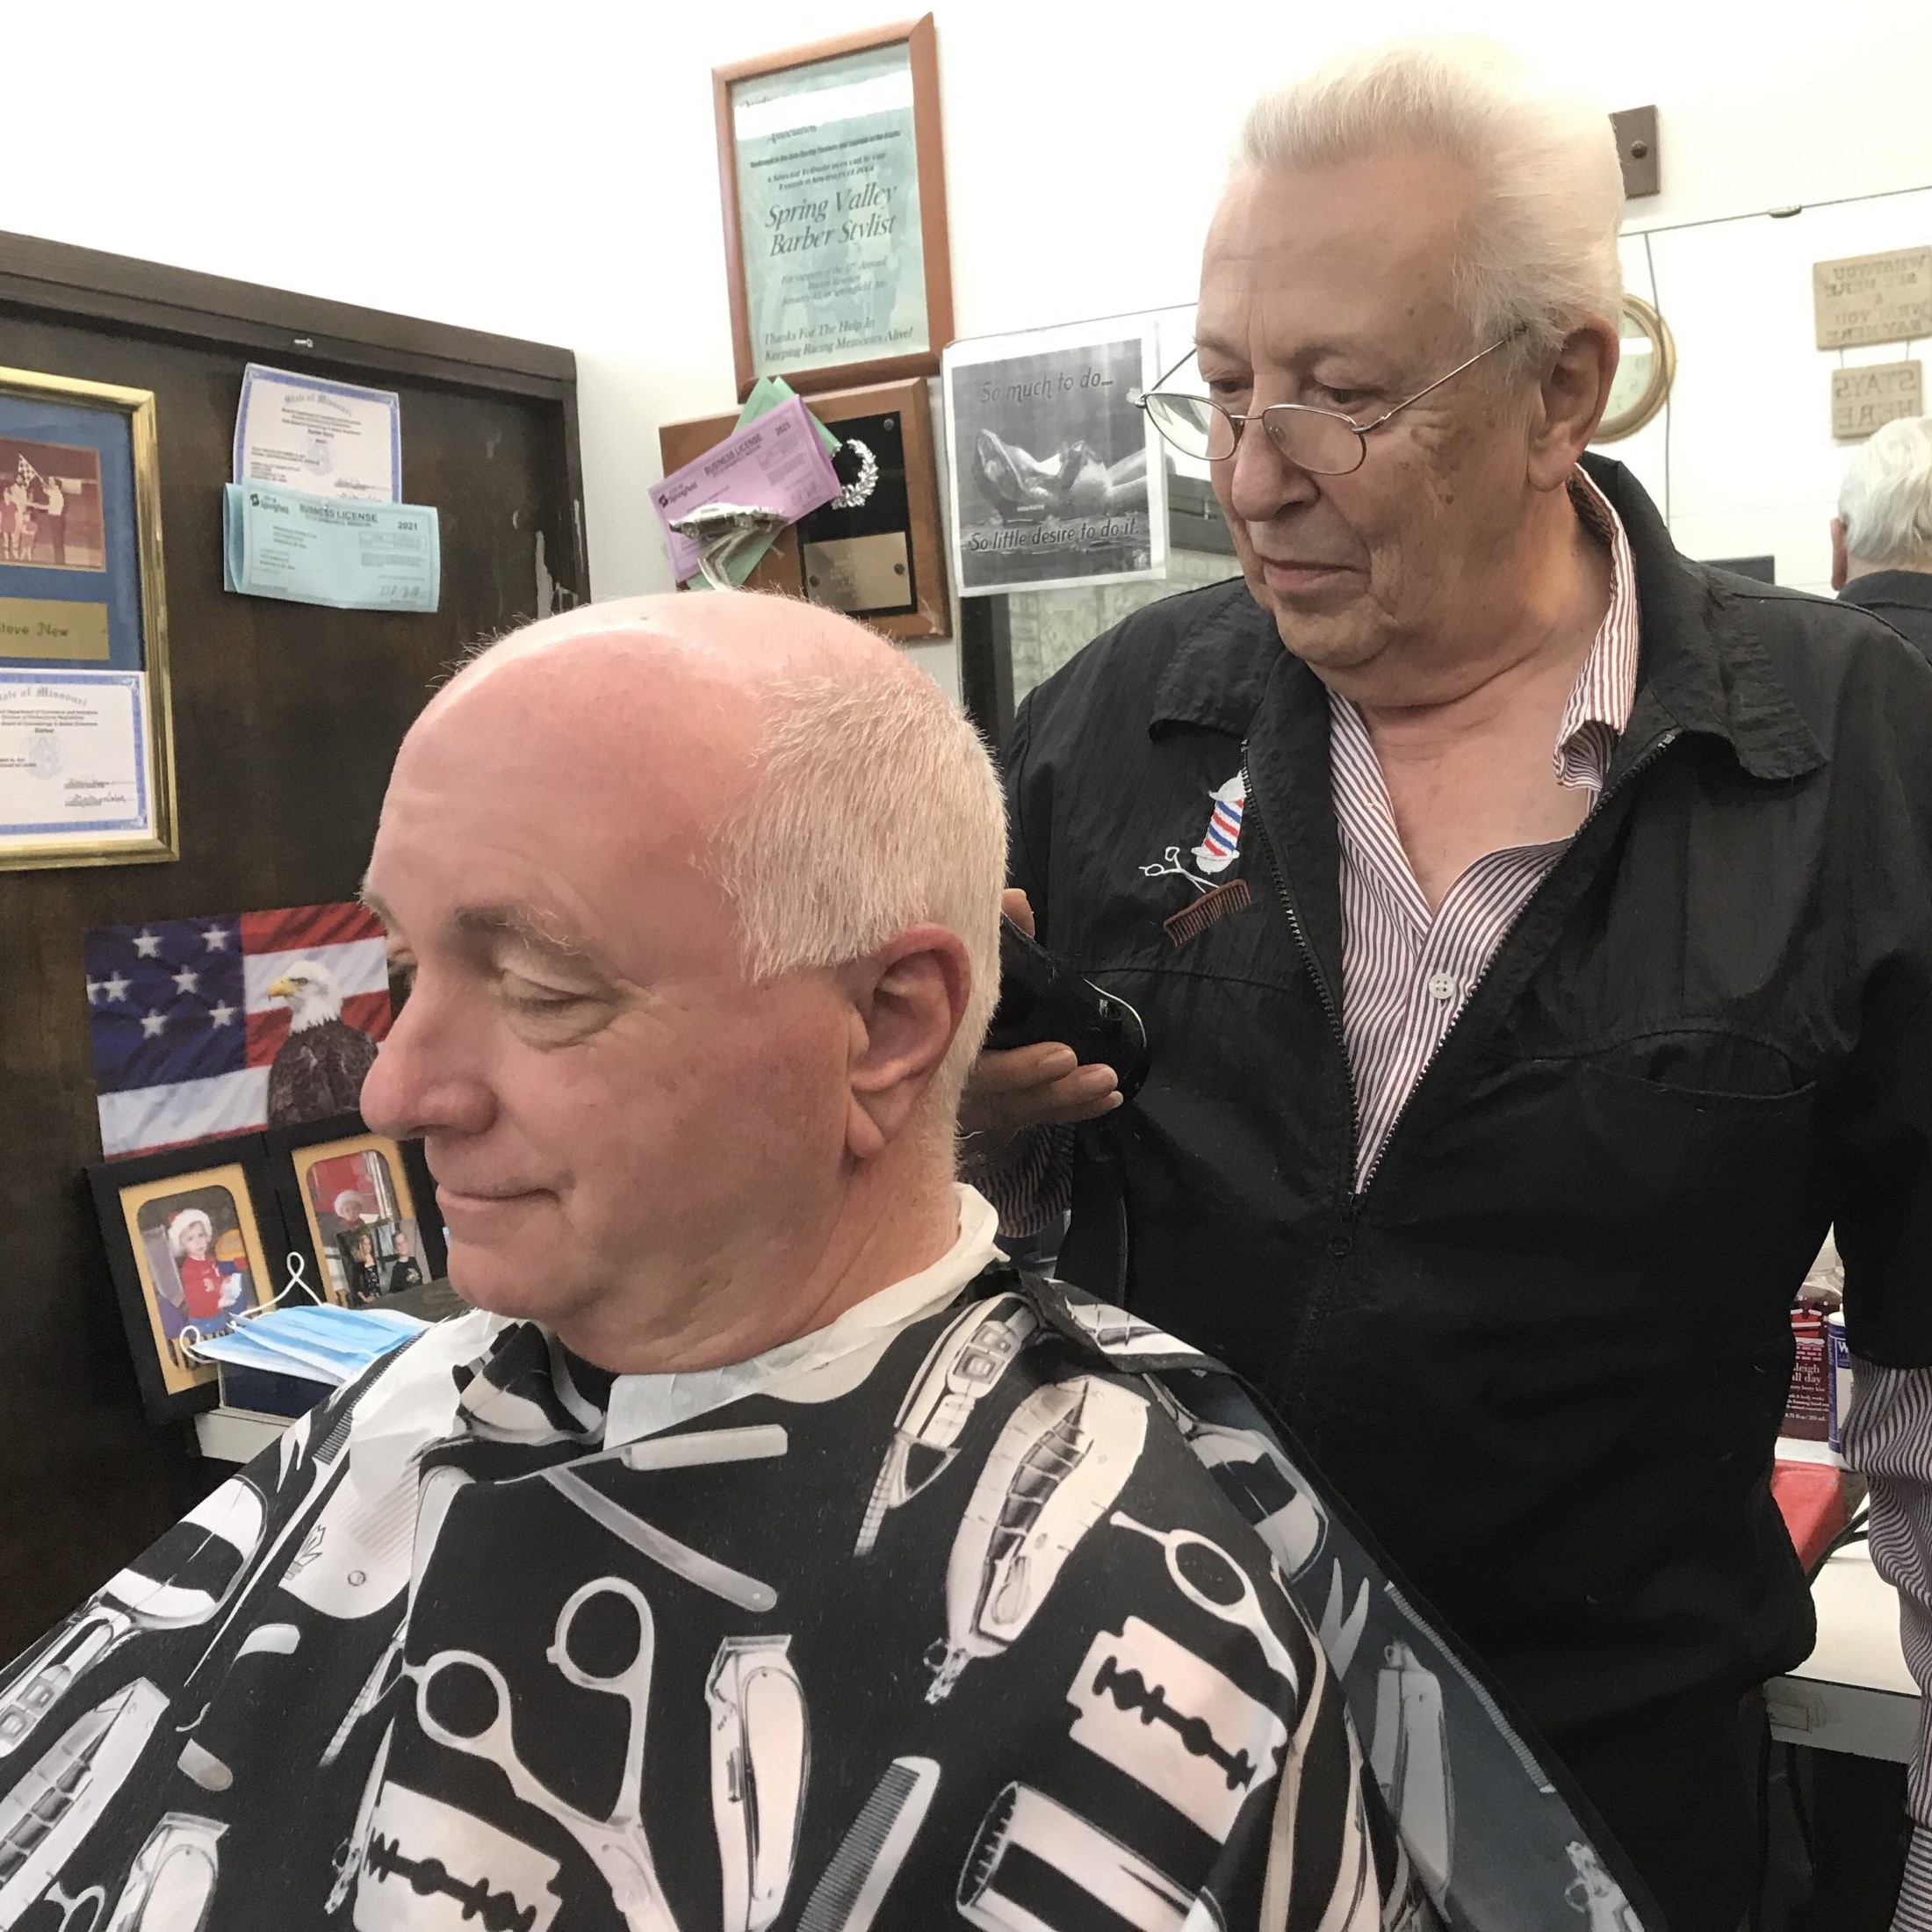 A barber cuts a customer's hair